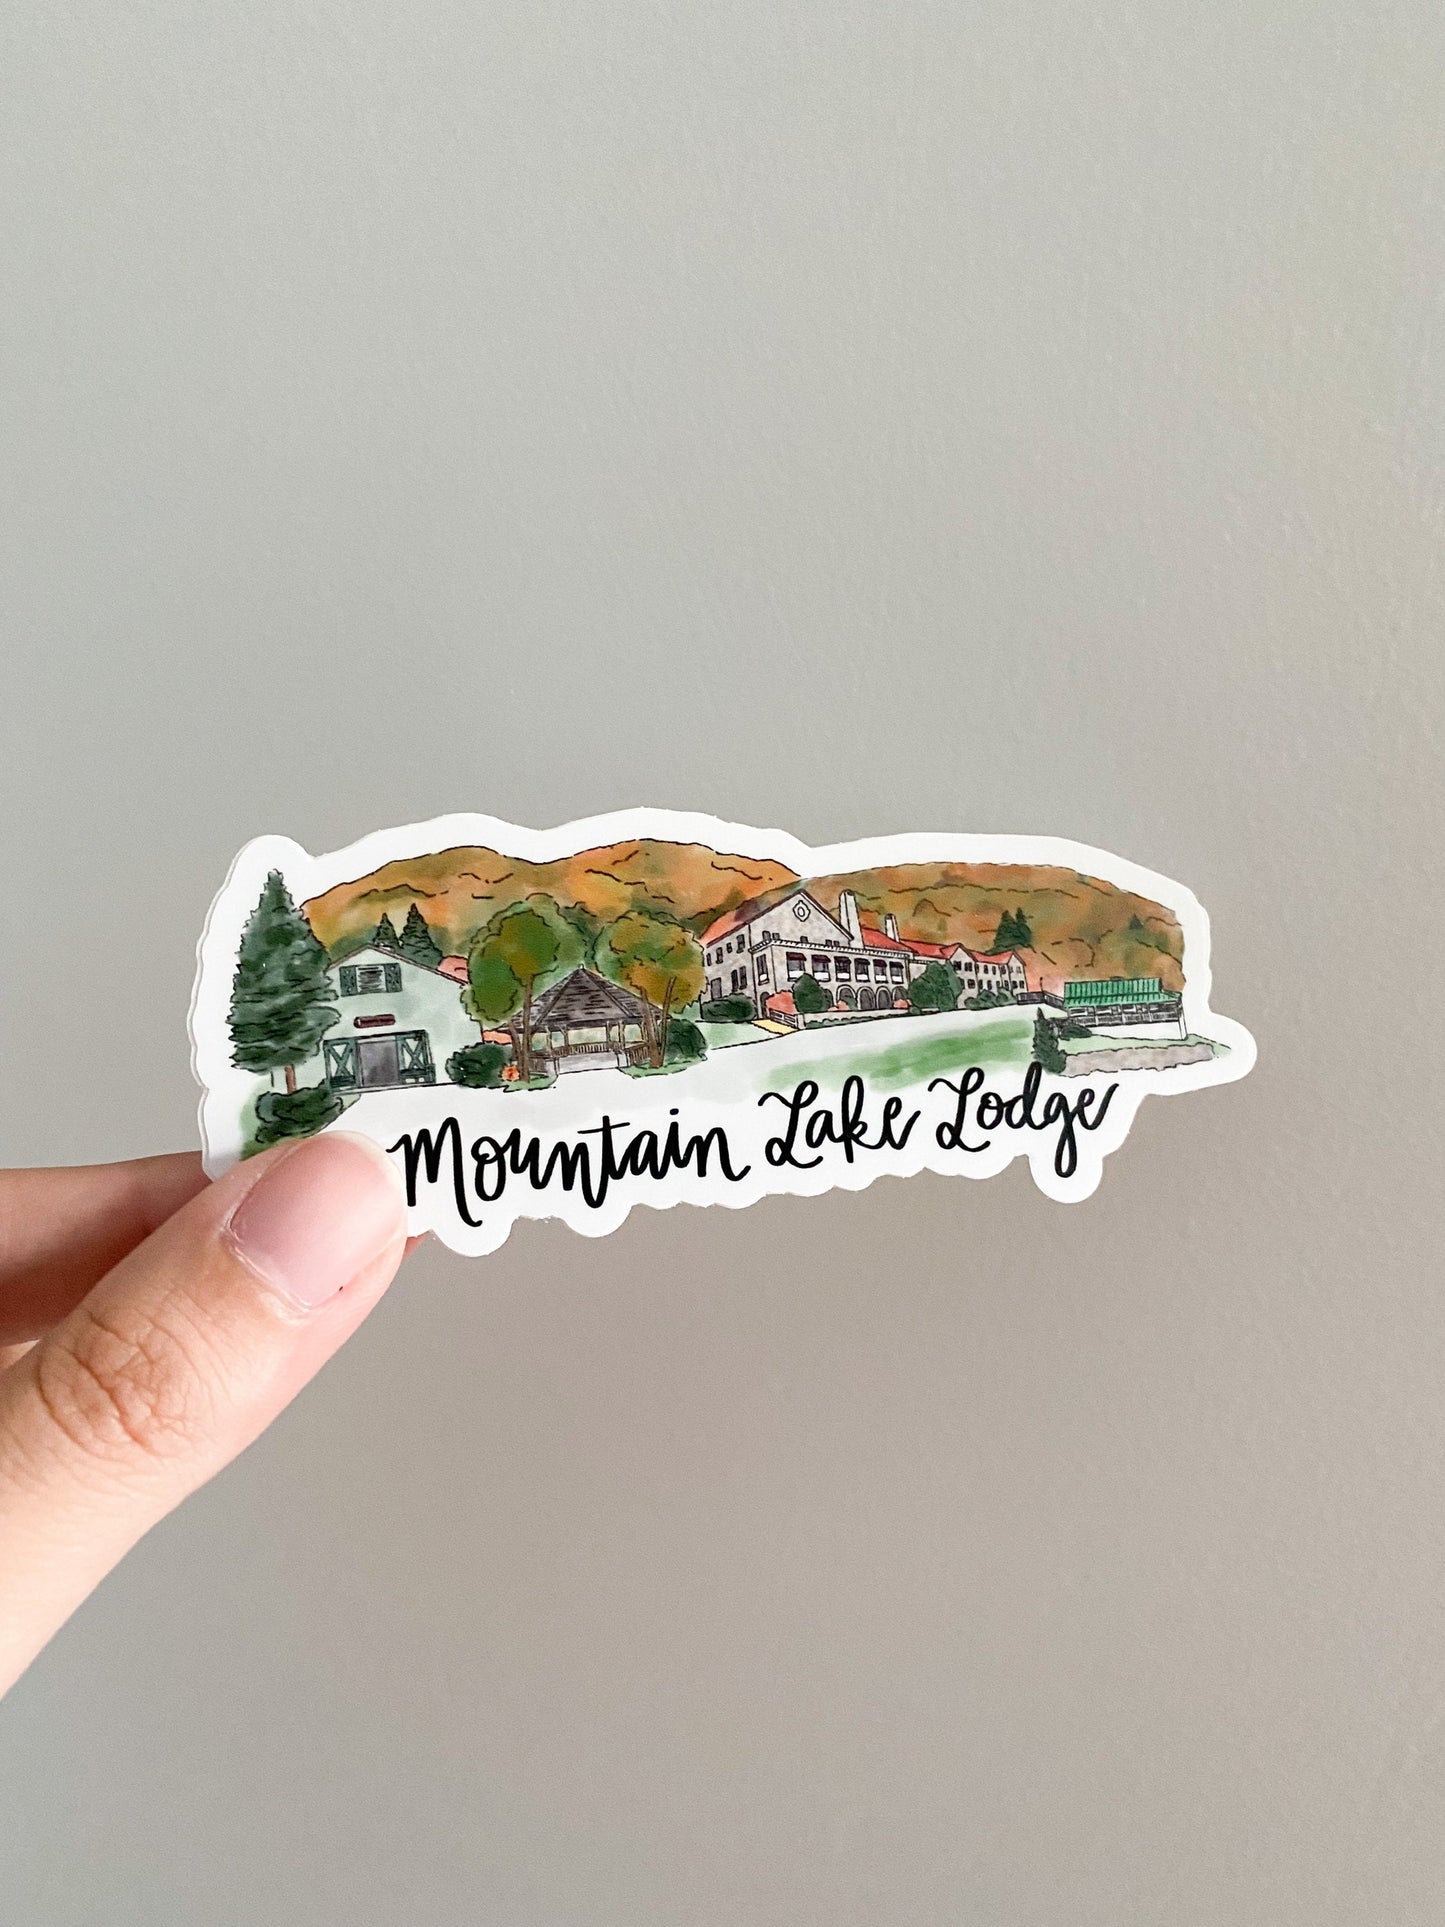 Mountain lake lodge Virginia Skyline sticker